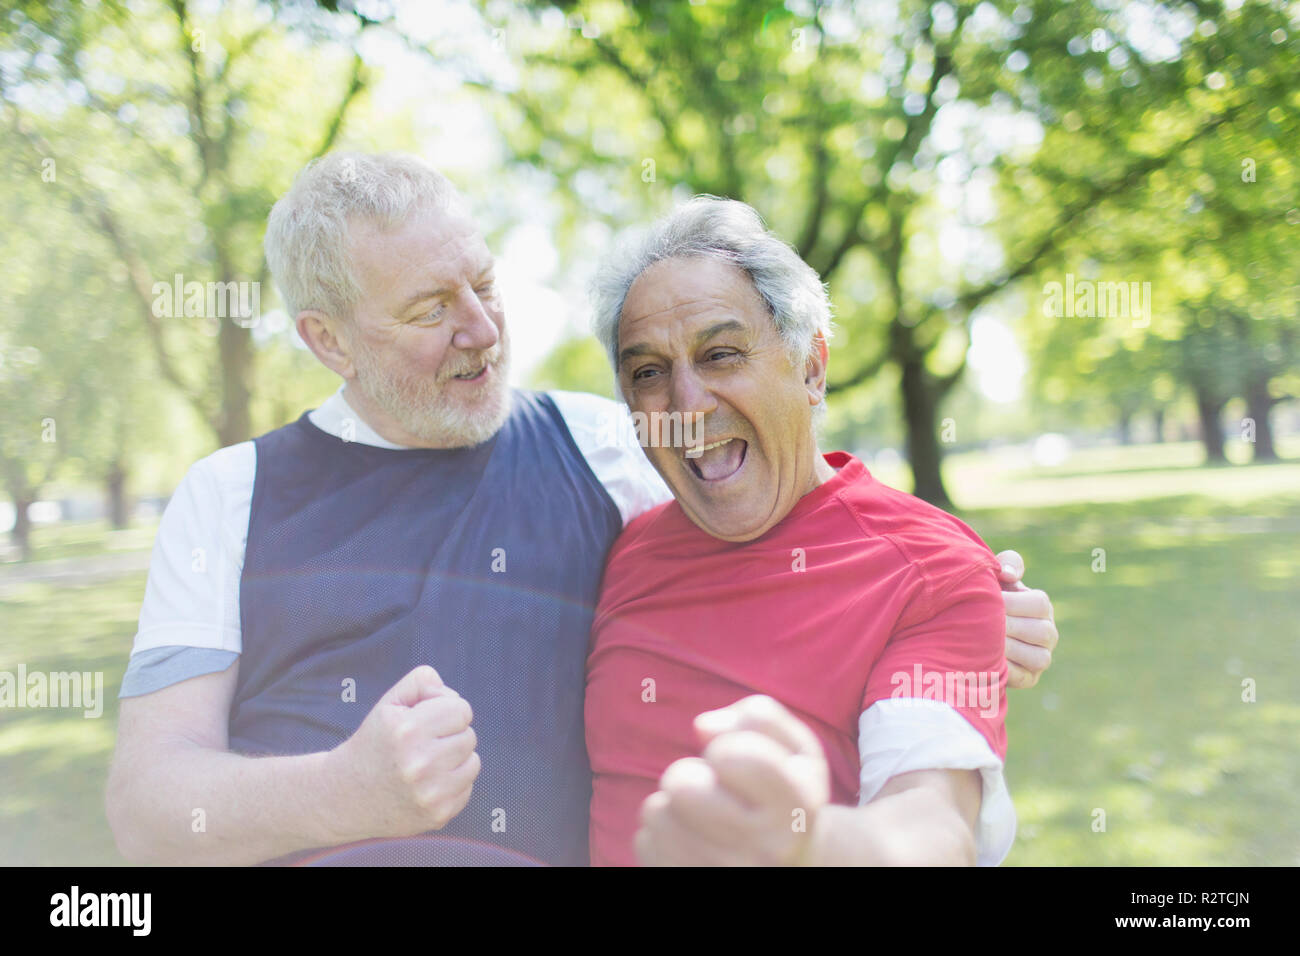 Exuberant active senior men friends cheering in park Stock Photo